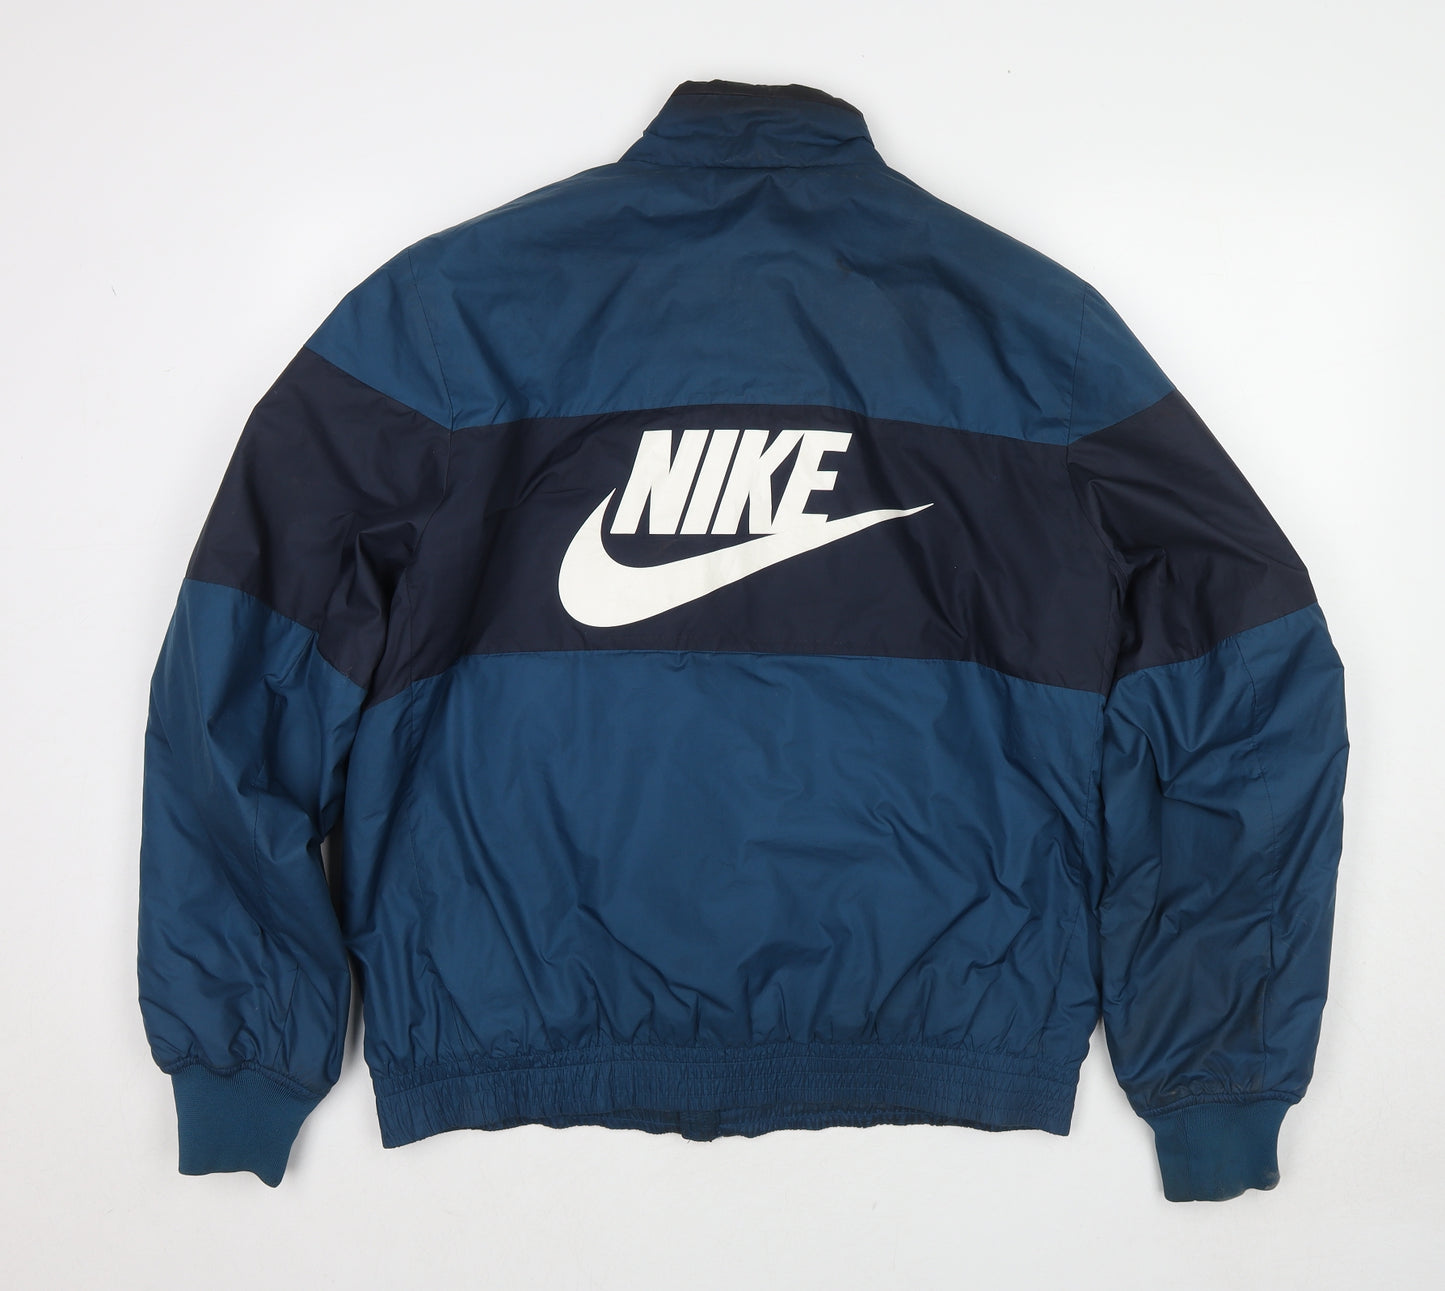 Nike Mens Blue Bomber Jacket Jacket Size L Zip